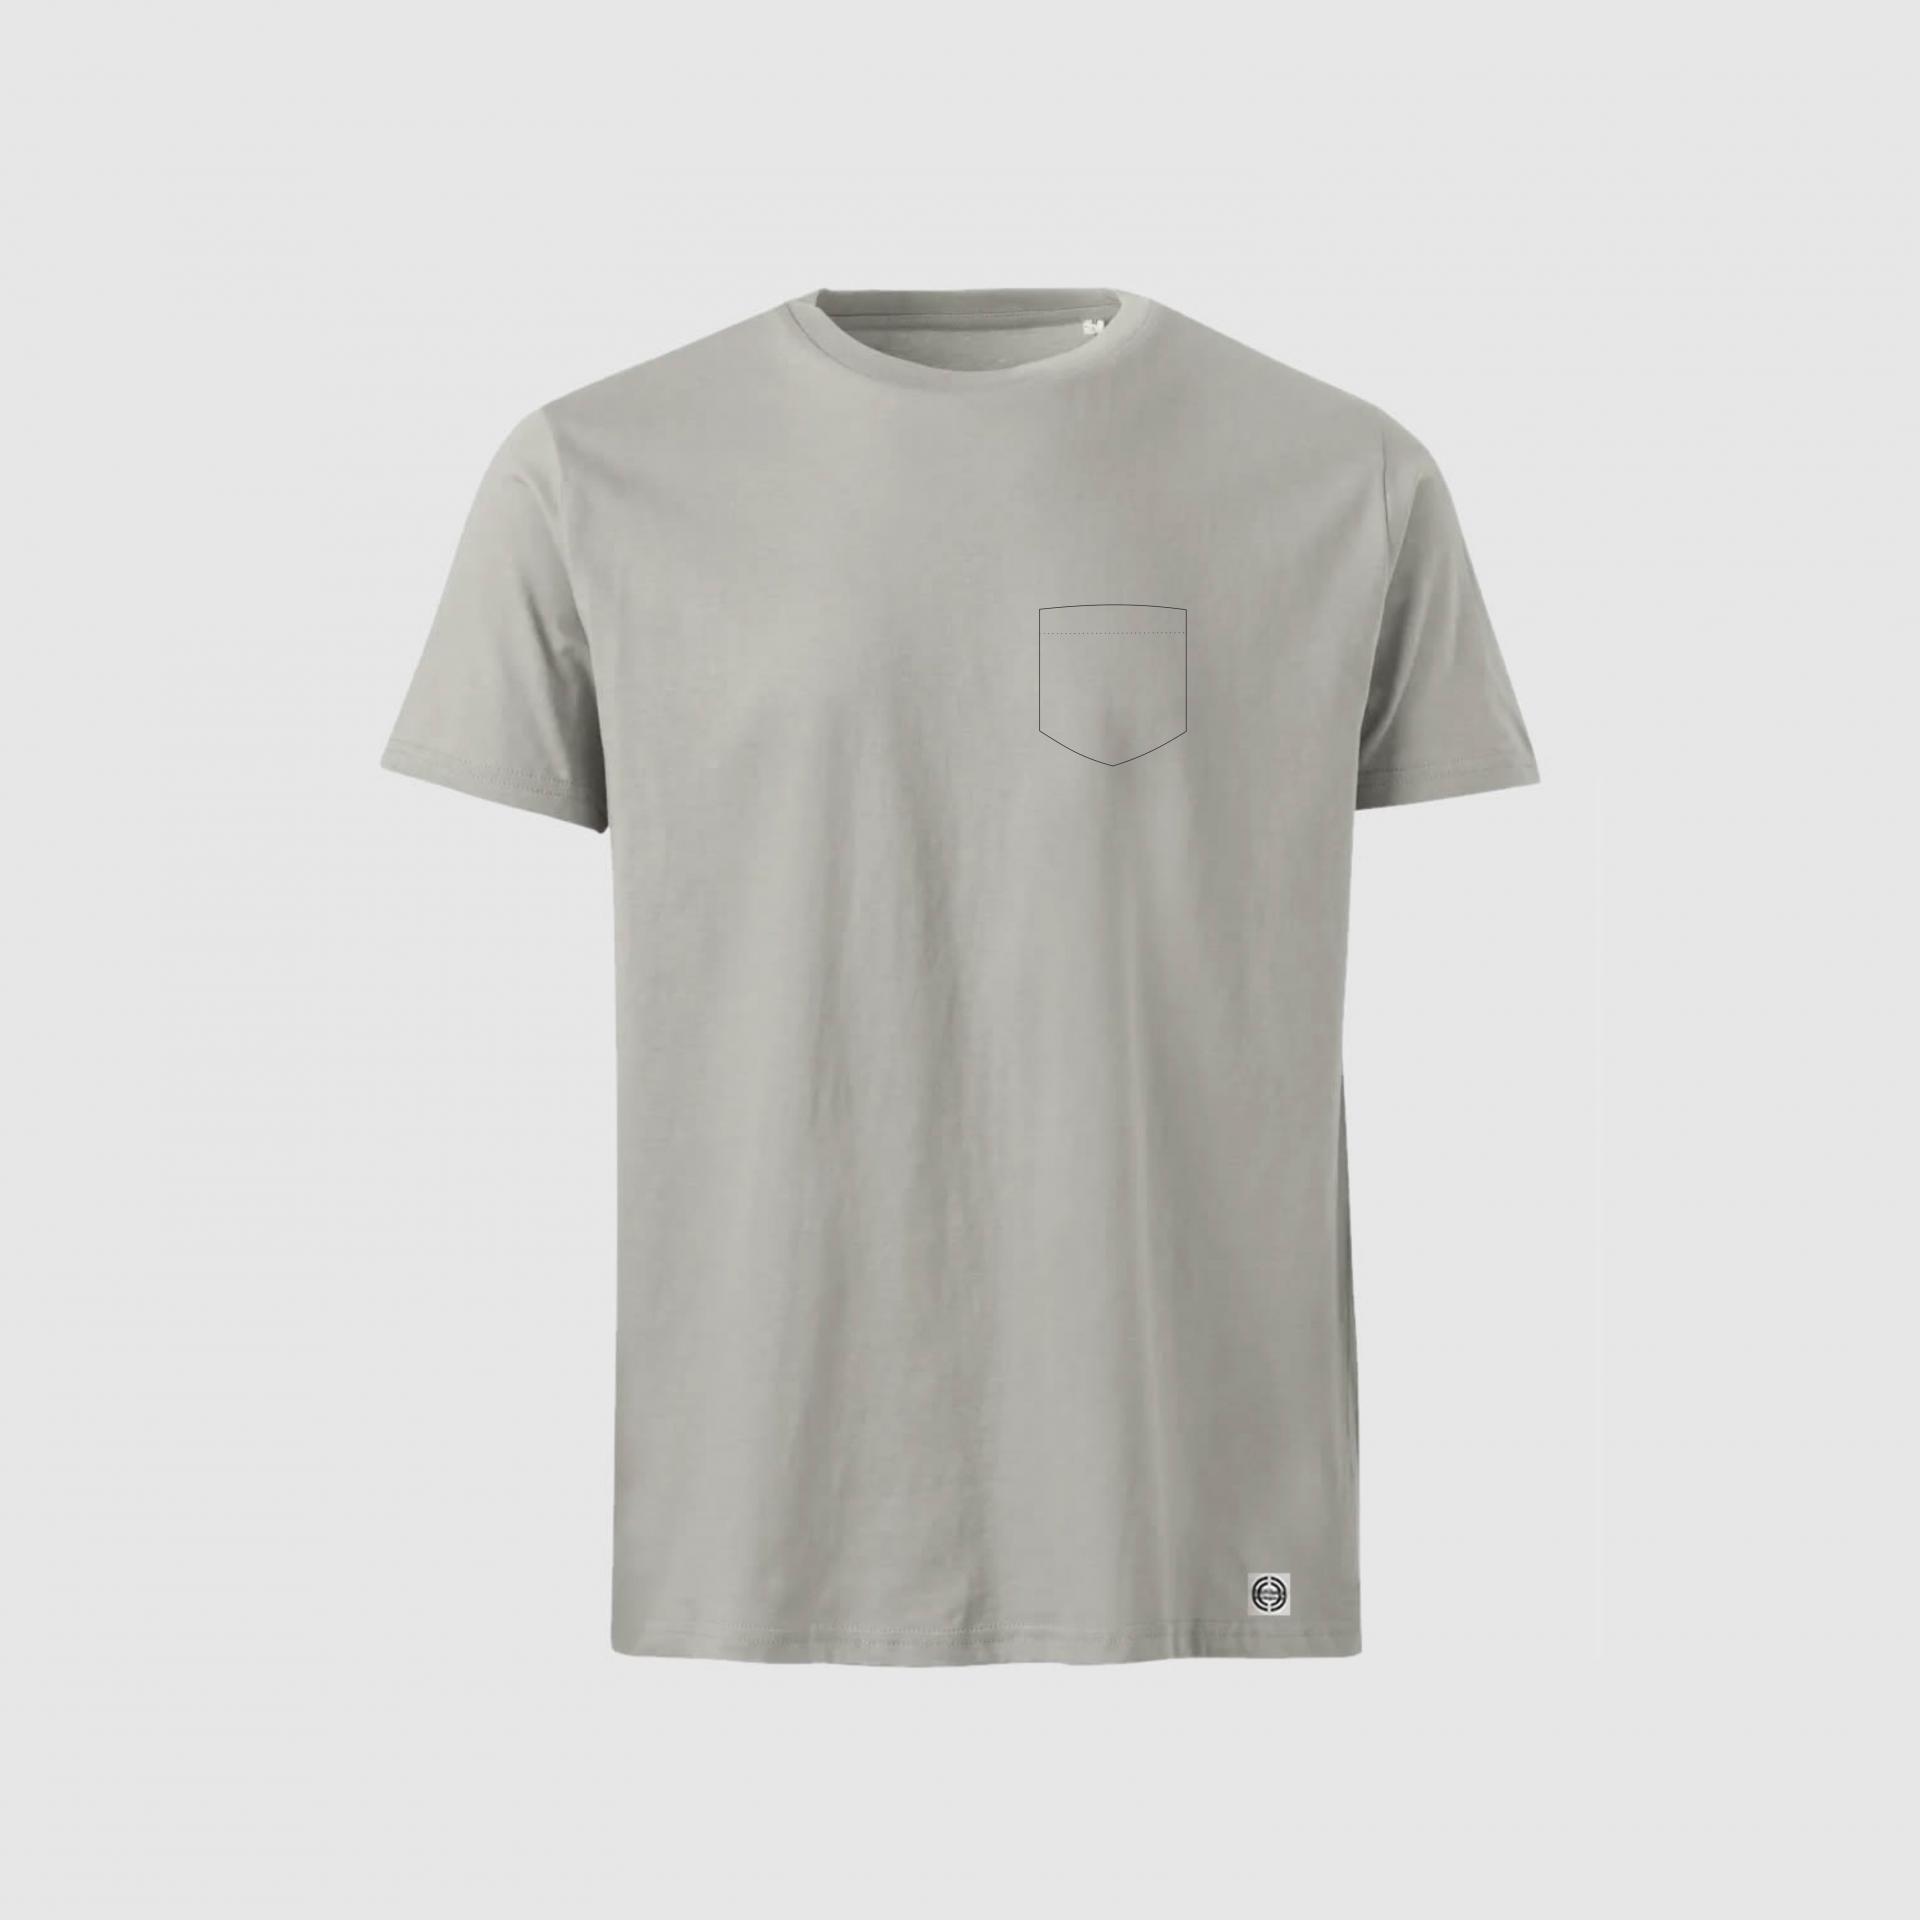 Camiseta unisex algodón orgánico bolsillo personalizado color gris fósil